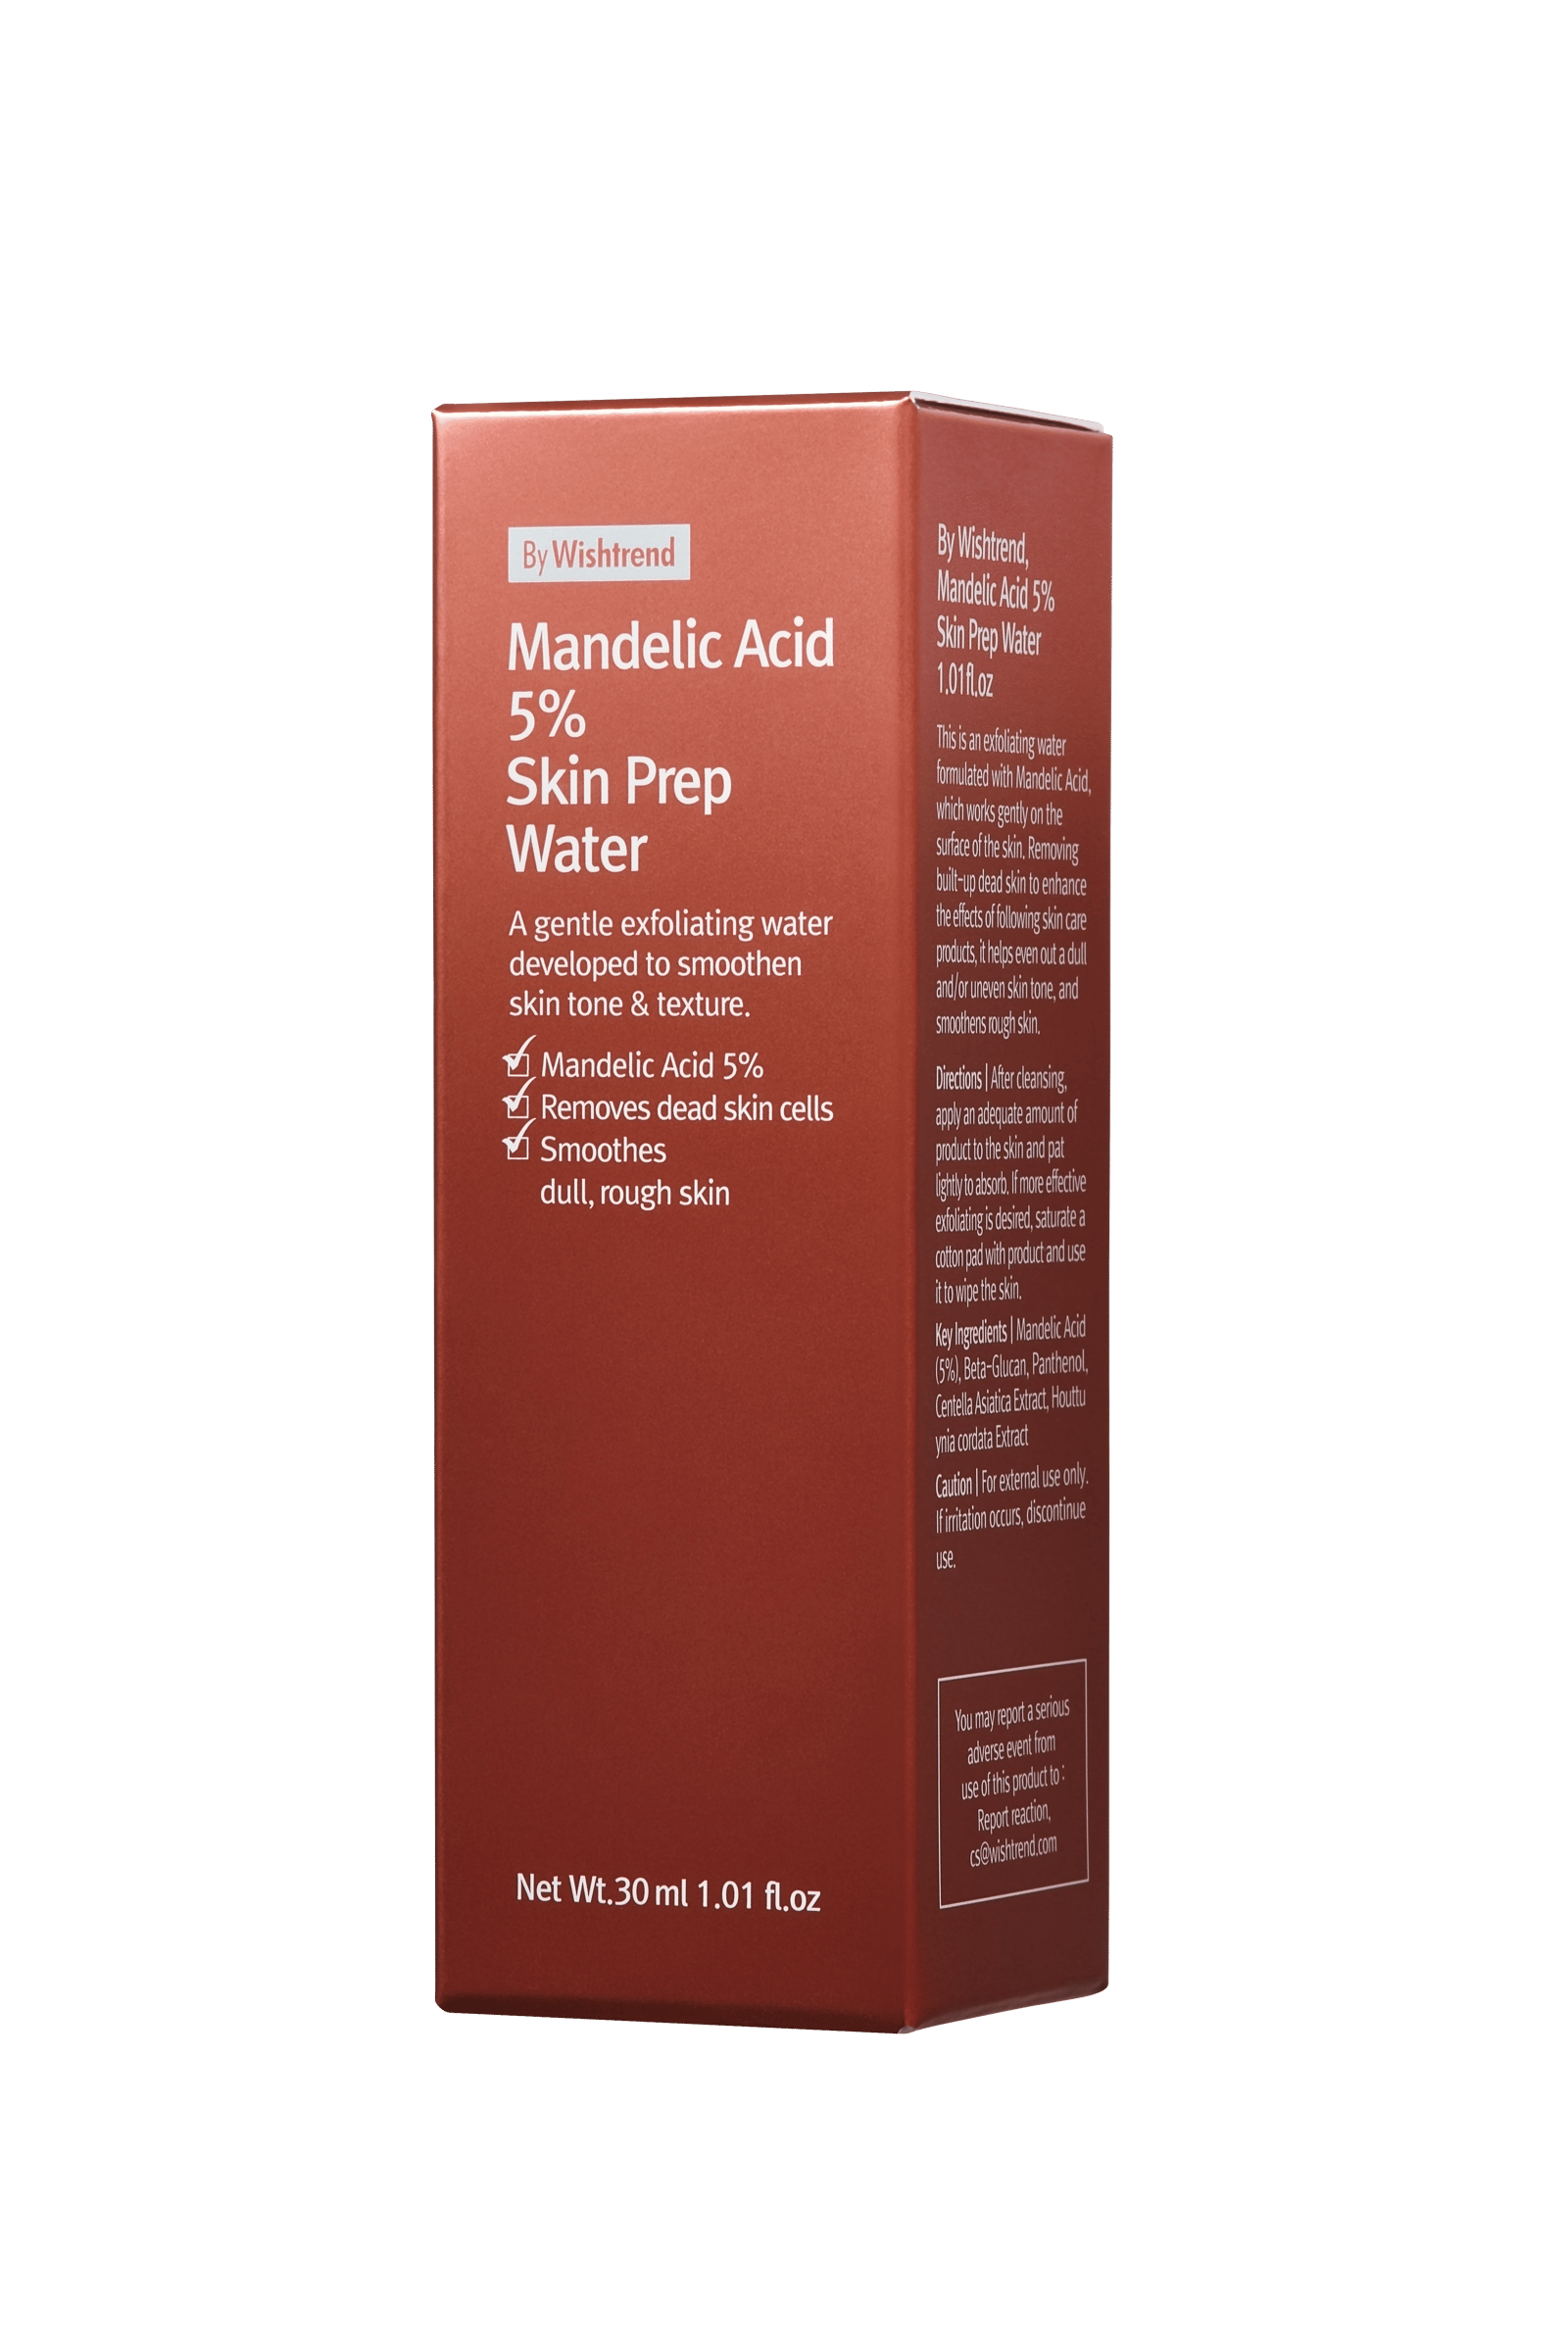 By Wishtrend Mandelic Acid 5% Skin Prep Water 30 ml